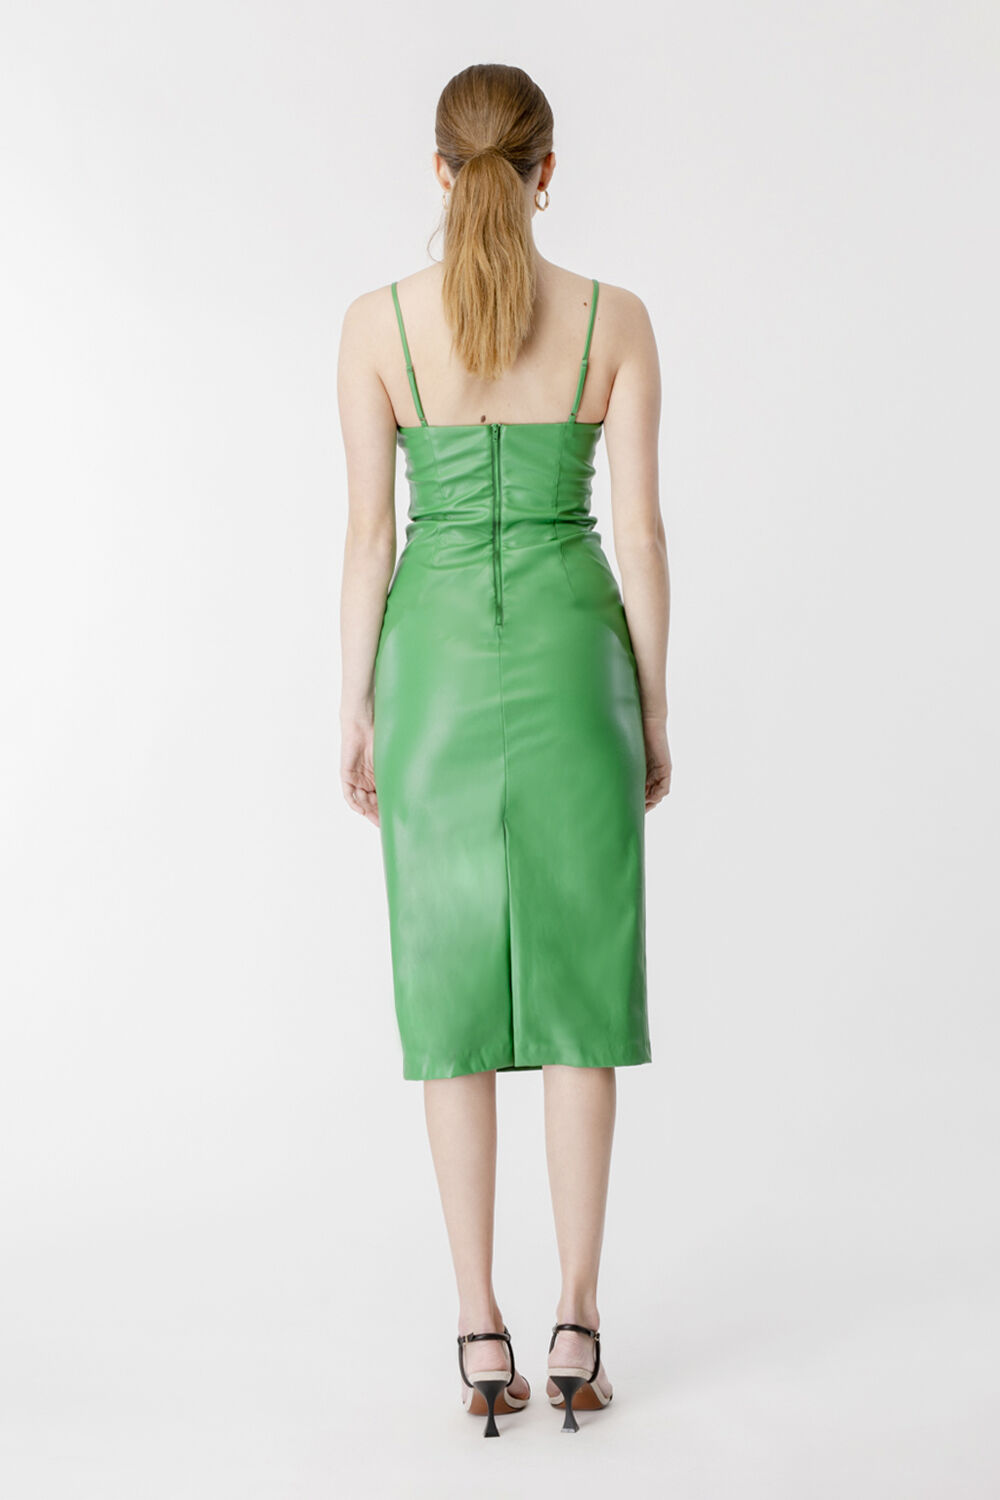 SIBELLA DRESS in colour CLASSIC GREEN